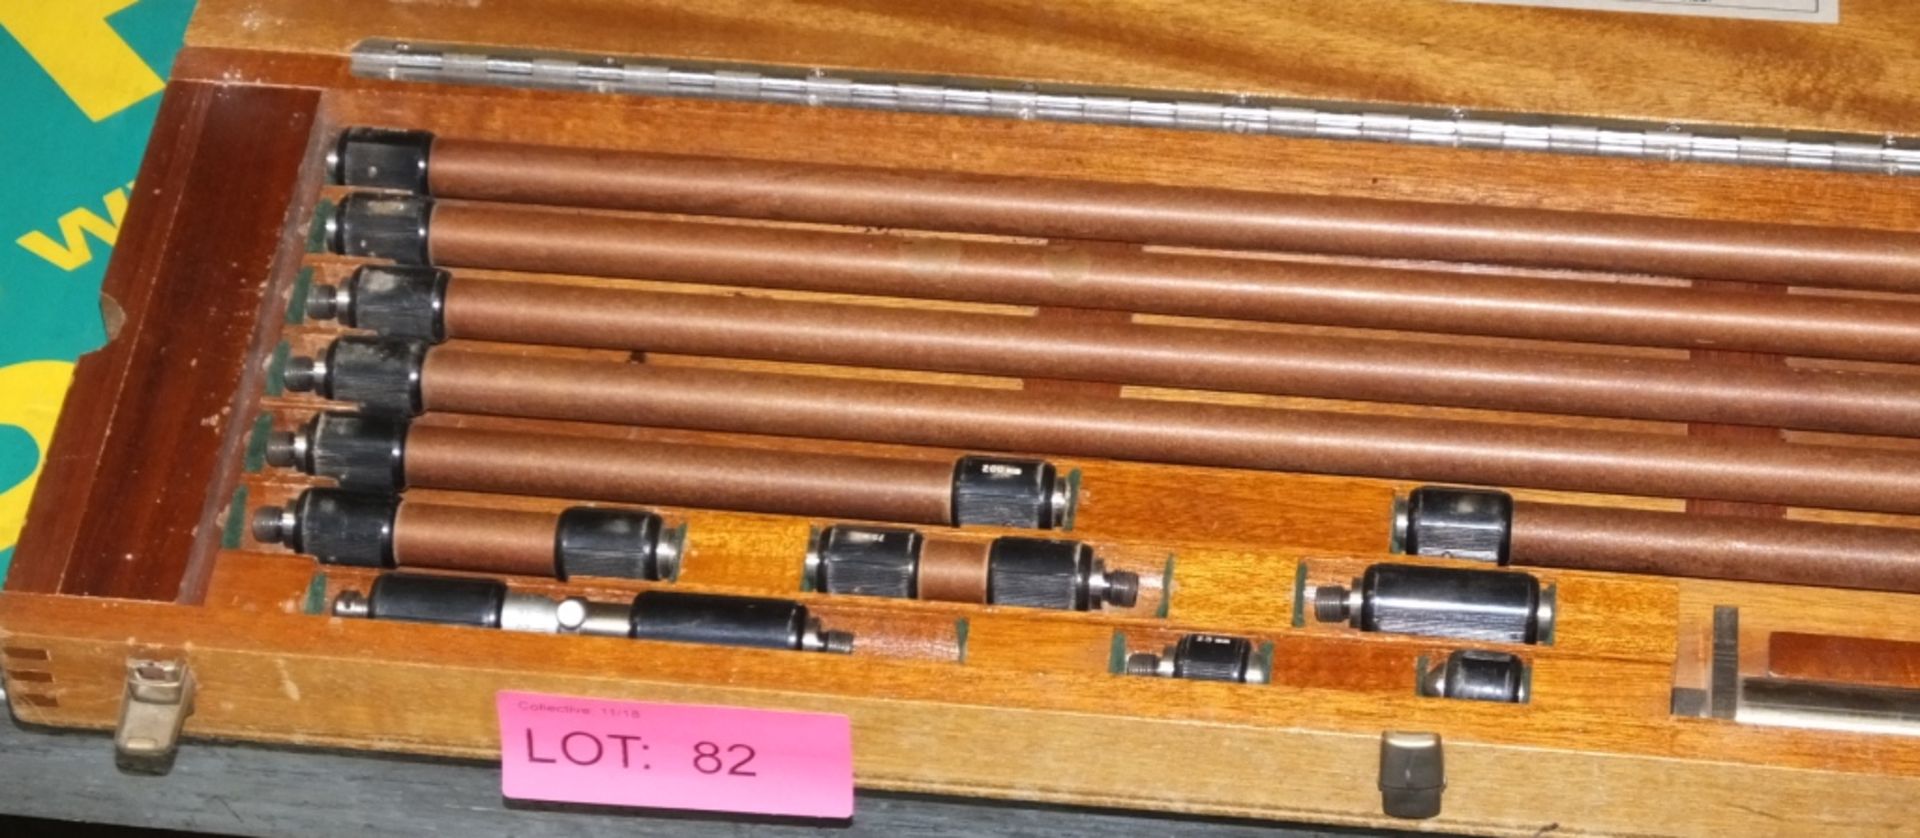 Coventry Matrix Stick Micrometer Set - Image 2 of 4